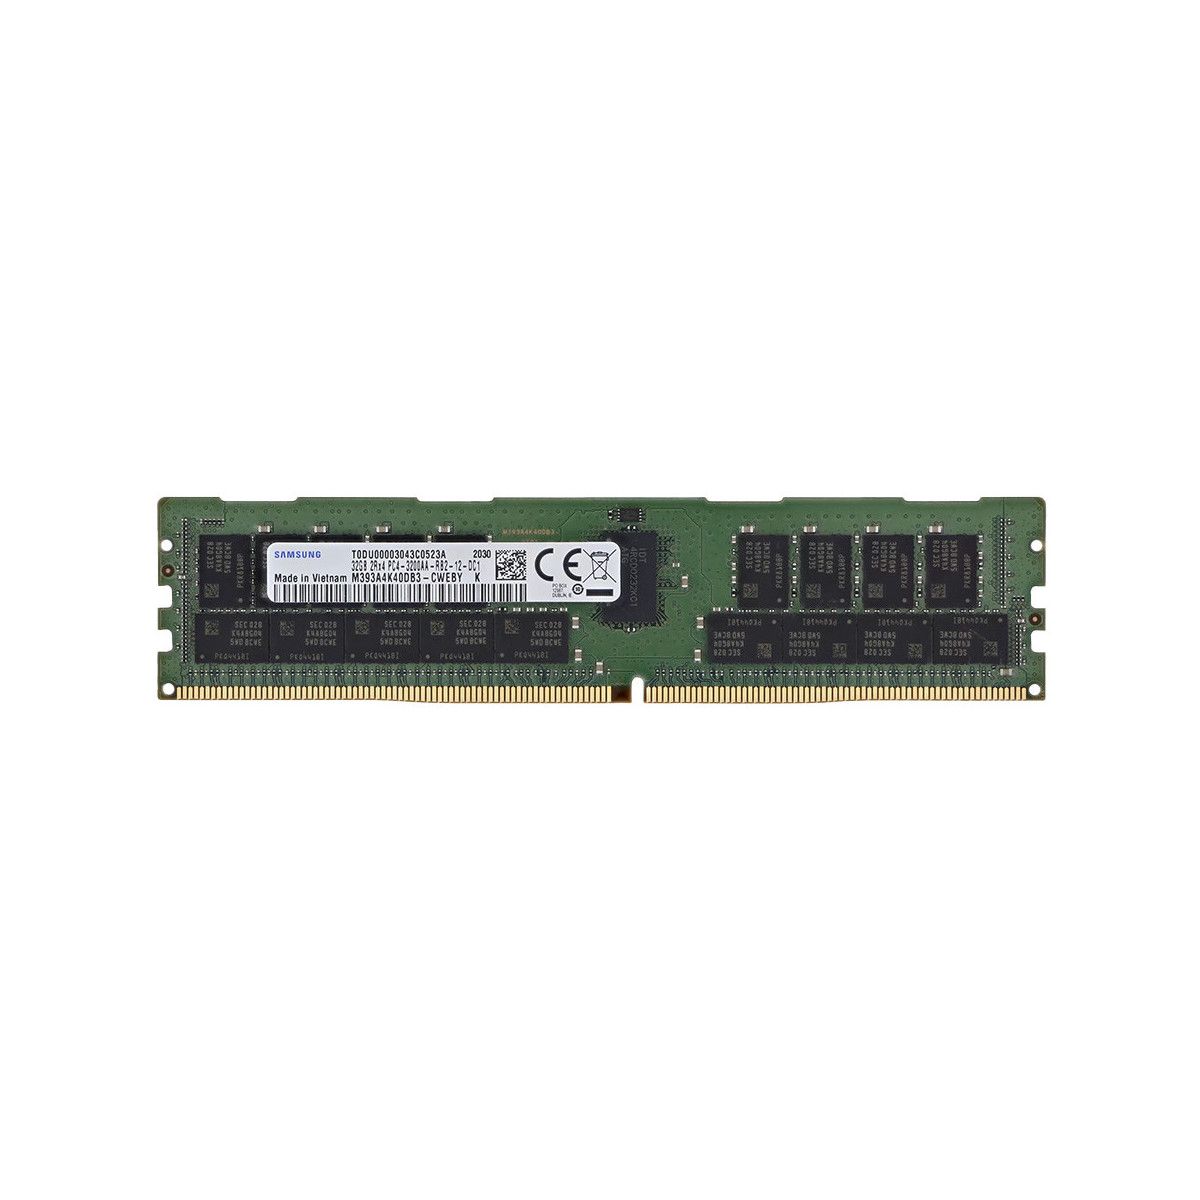 P06033‐K21-MS - Memstar 1x 32GB DDR4-3200 RDIMM PC4-25600R - Mem-star Compatible OEM Memory 1 - Memstar 